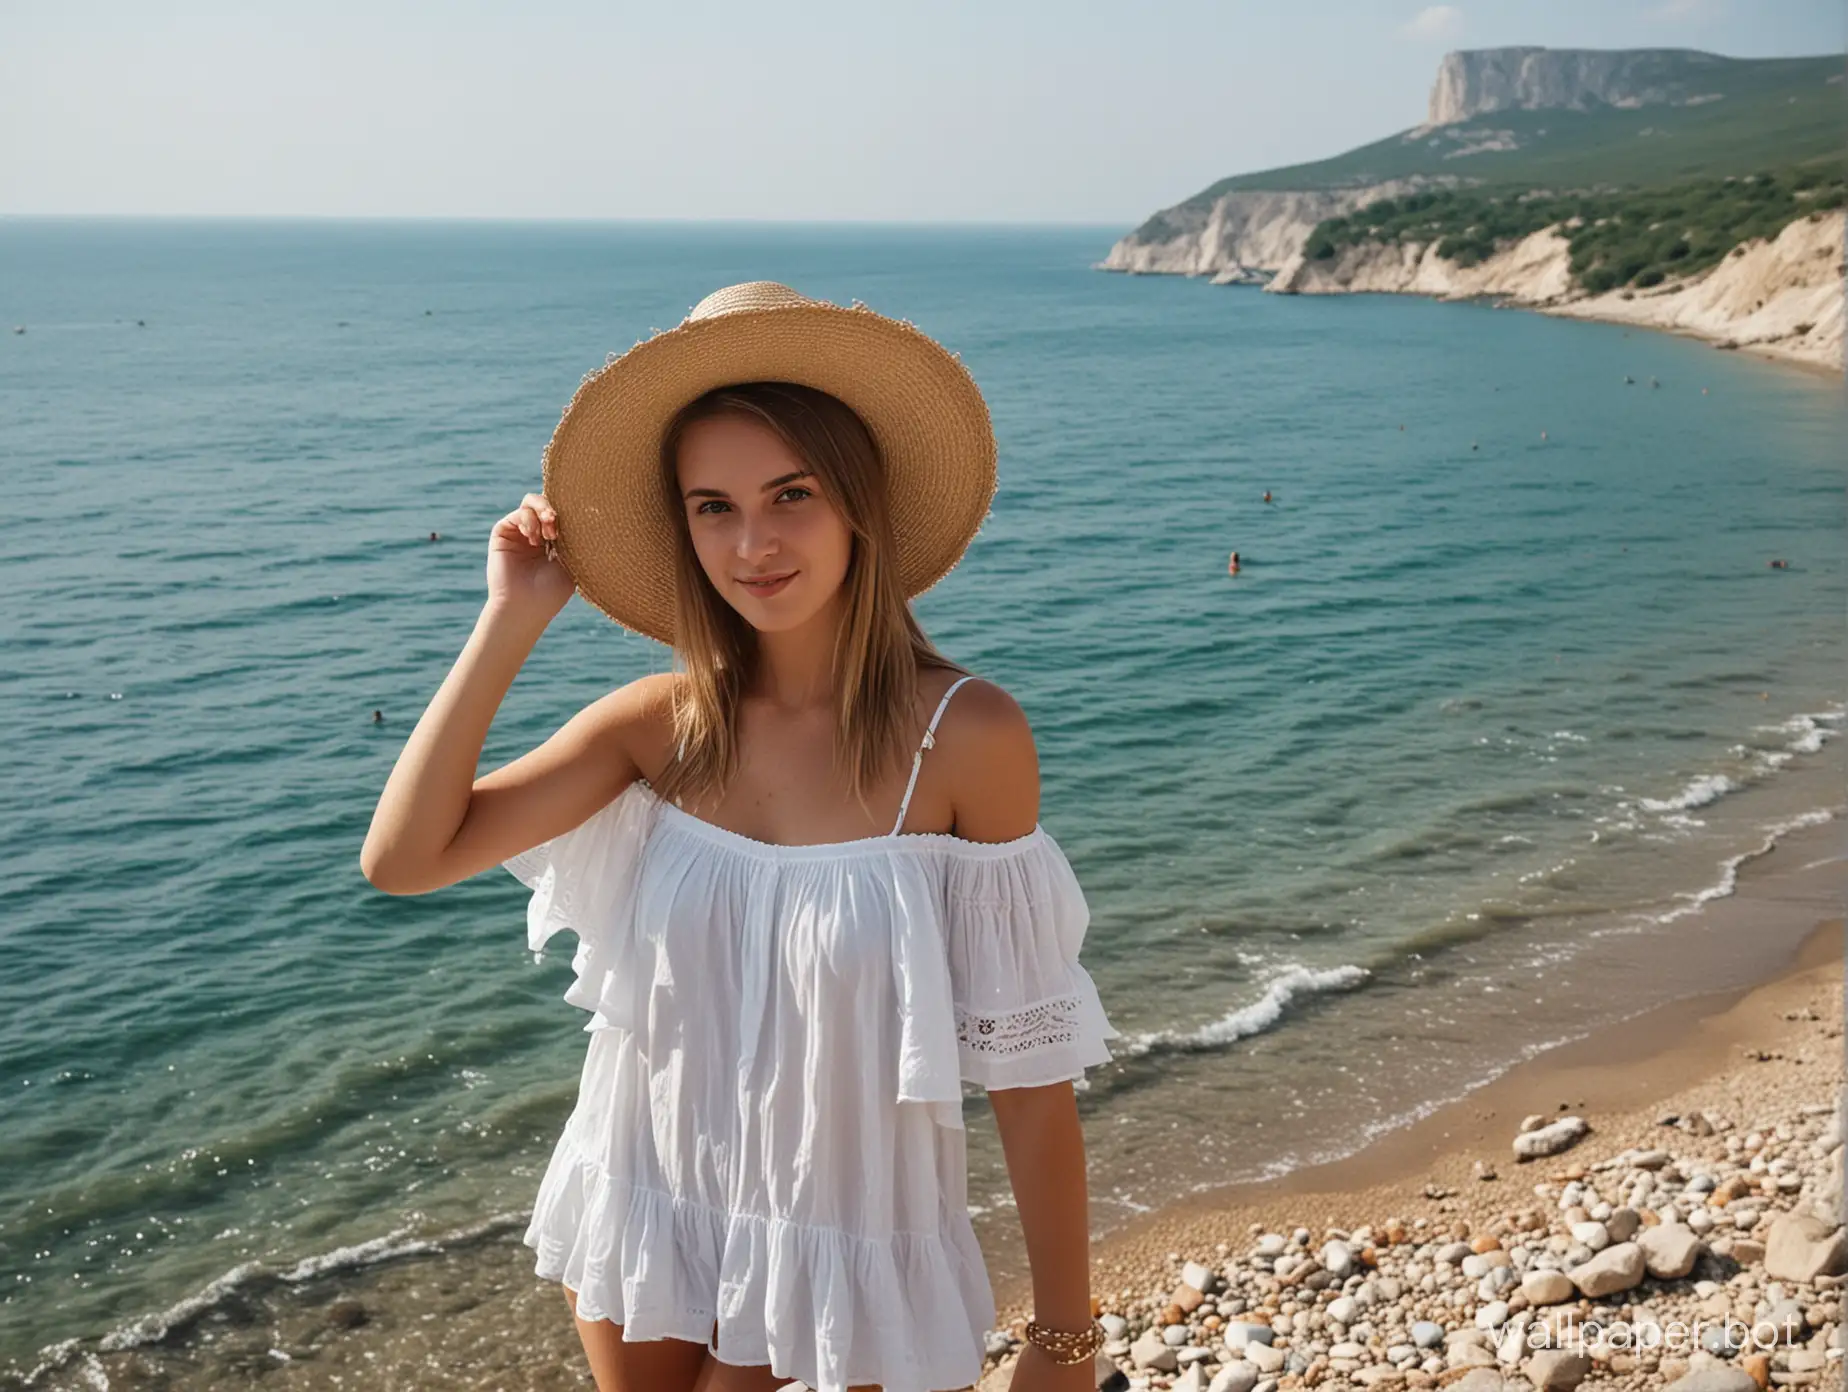 Summer-Girl-Enjoying-Crimea-Sea-View-with-Hat